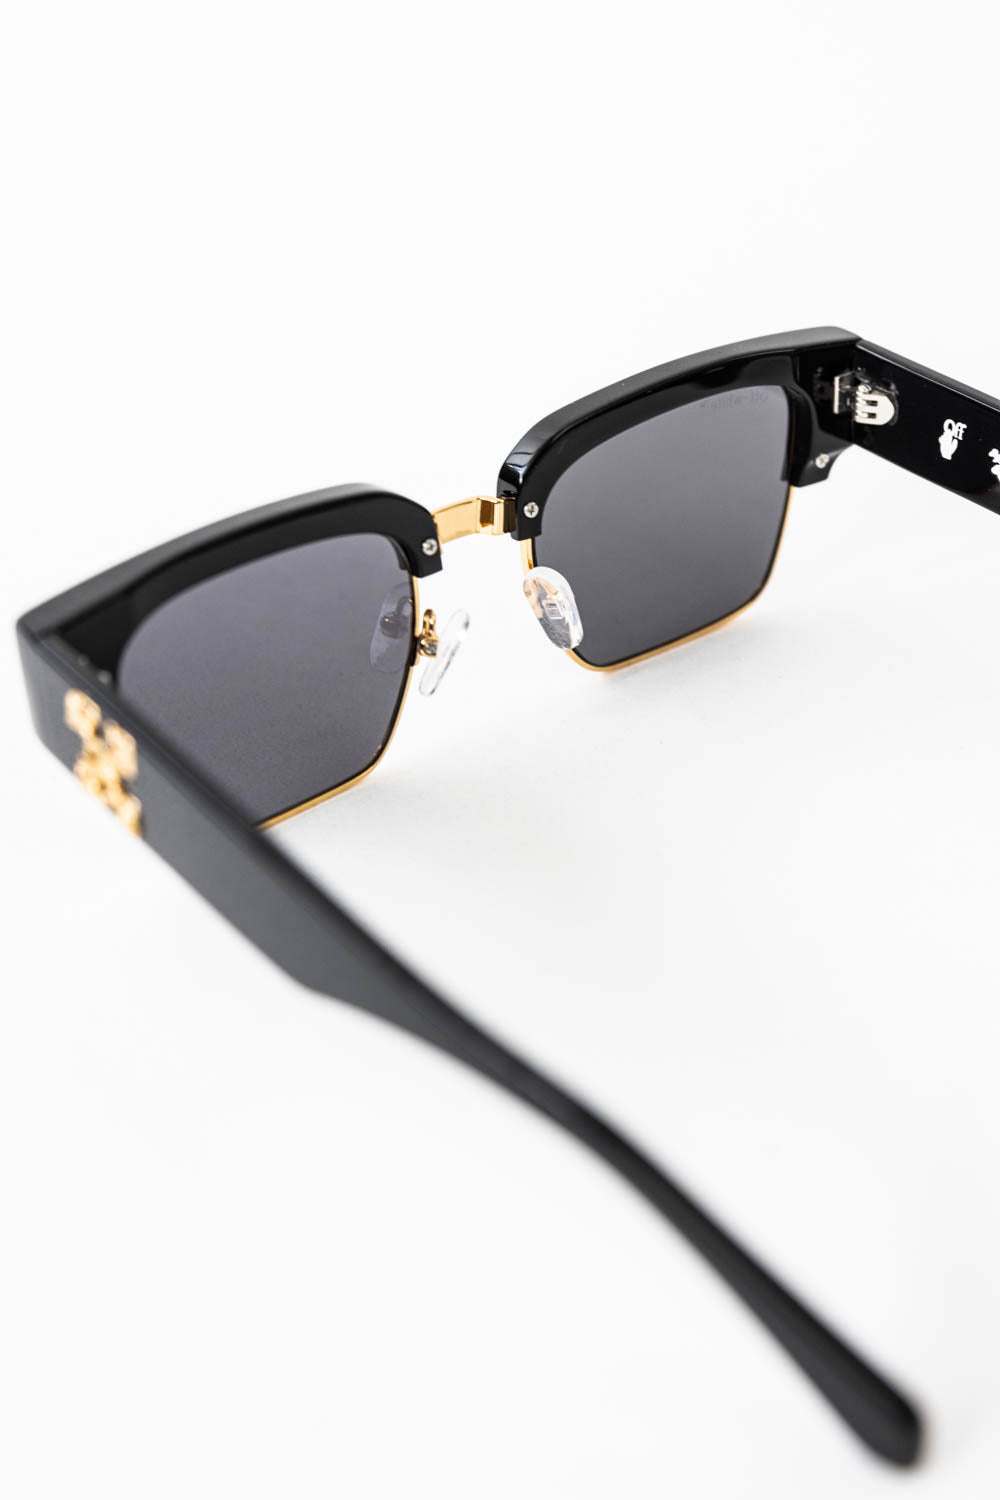 OFF-WHITE Washintong Sunglasses Black/Gold